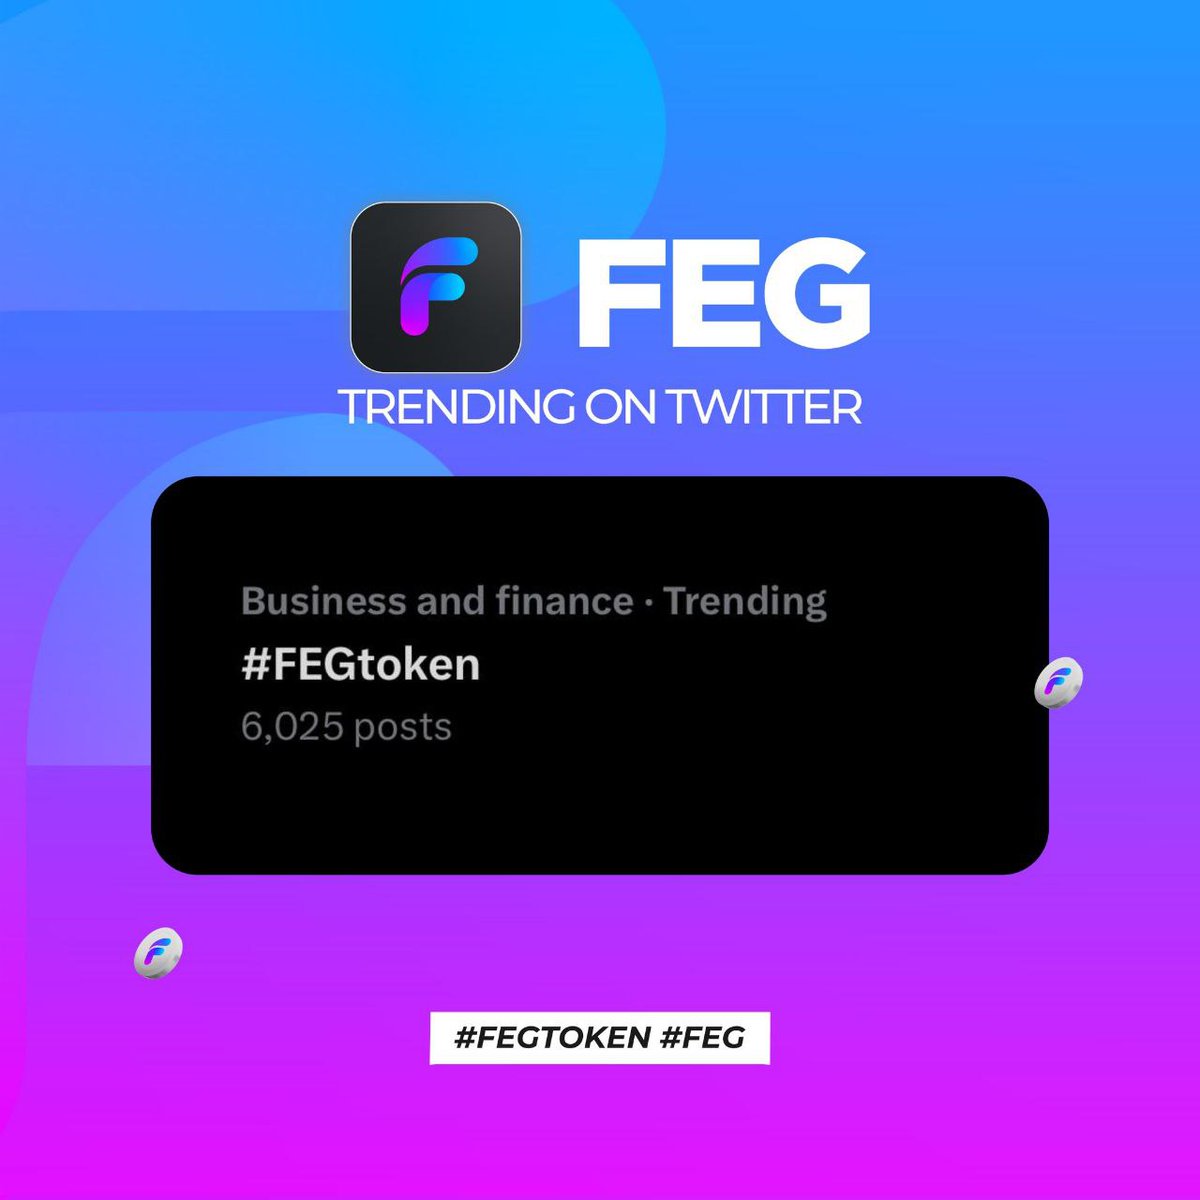 Are you ready for the change of world??!!

#FEG
#FEGtoken 🦍🦍🦍  
#SmartDeFi🔥🔥🔥
#FEGstake
#FEGdepployer

#FEGROX👽👽👽

#Token2049Singapore
#Token2049
#whatsatstake